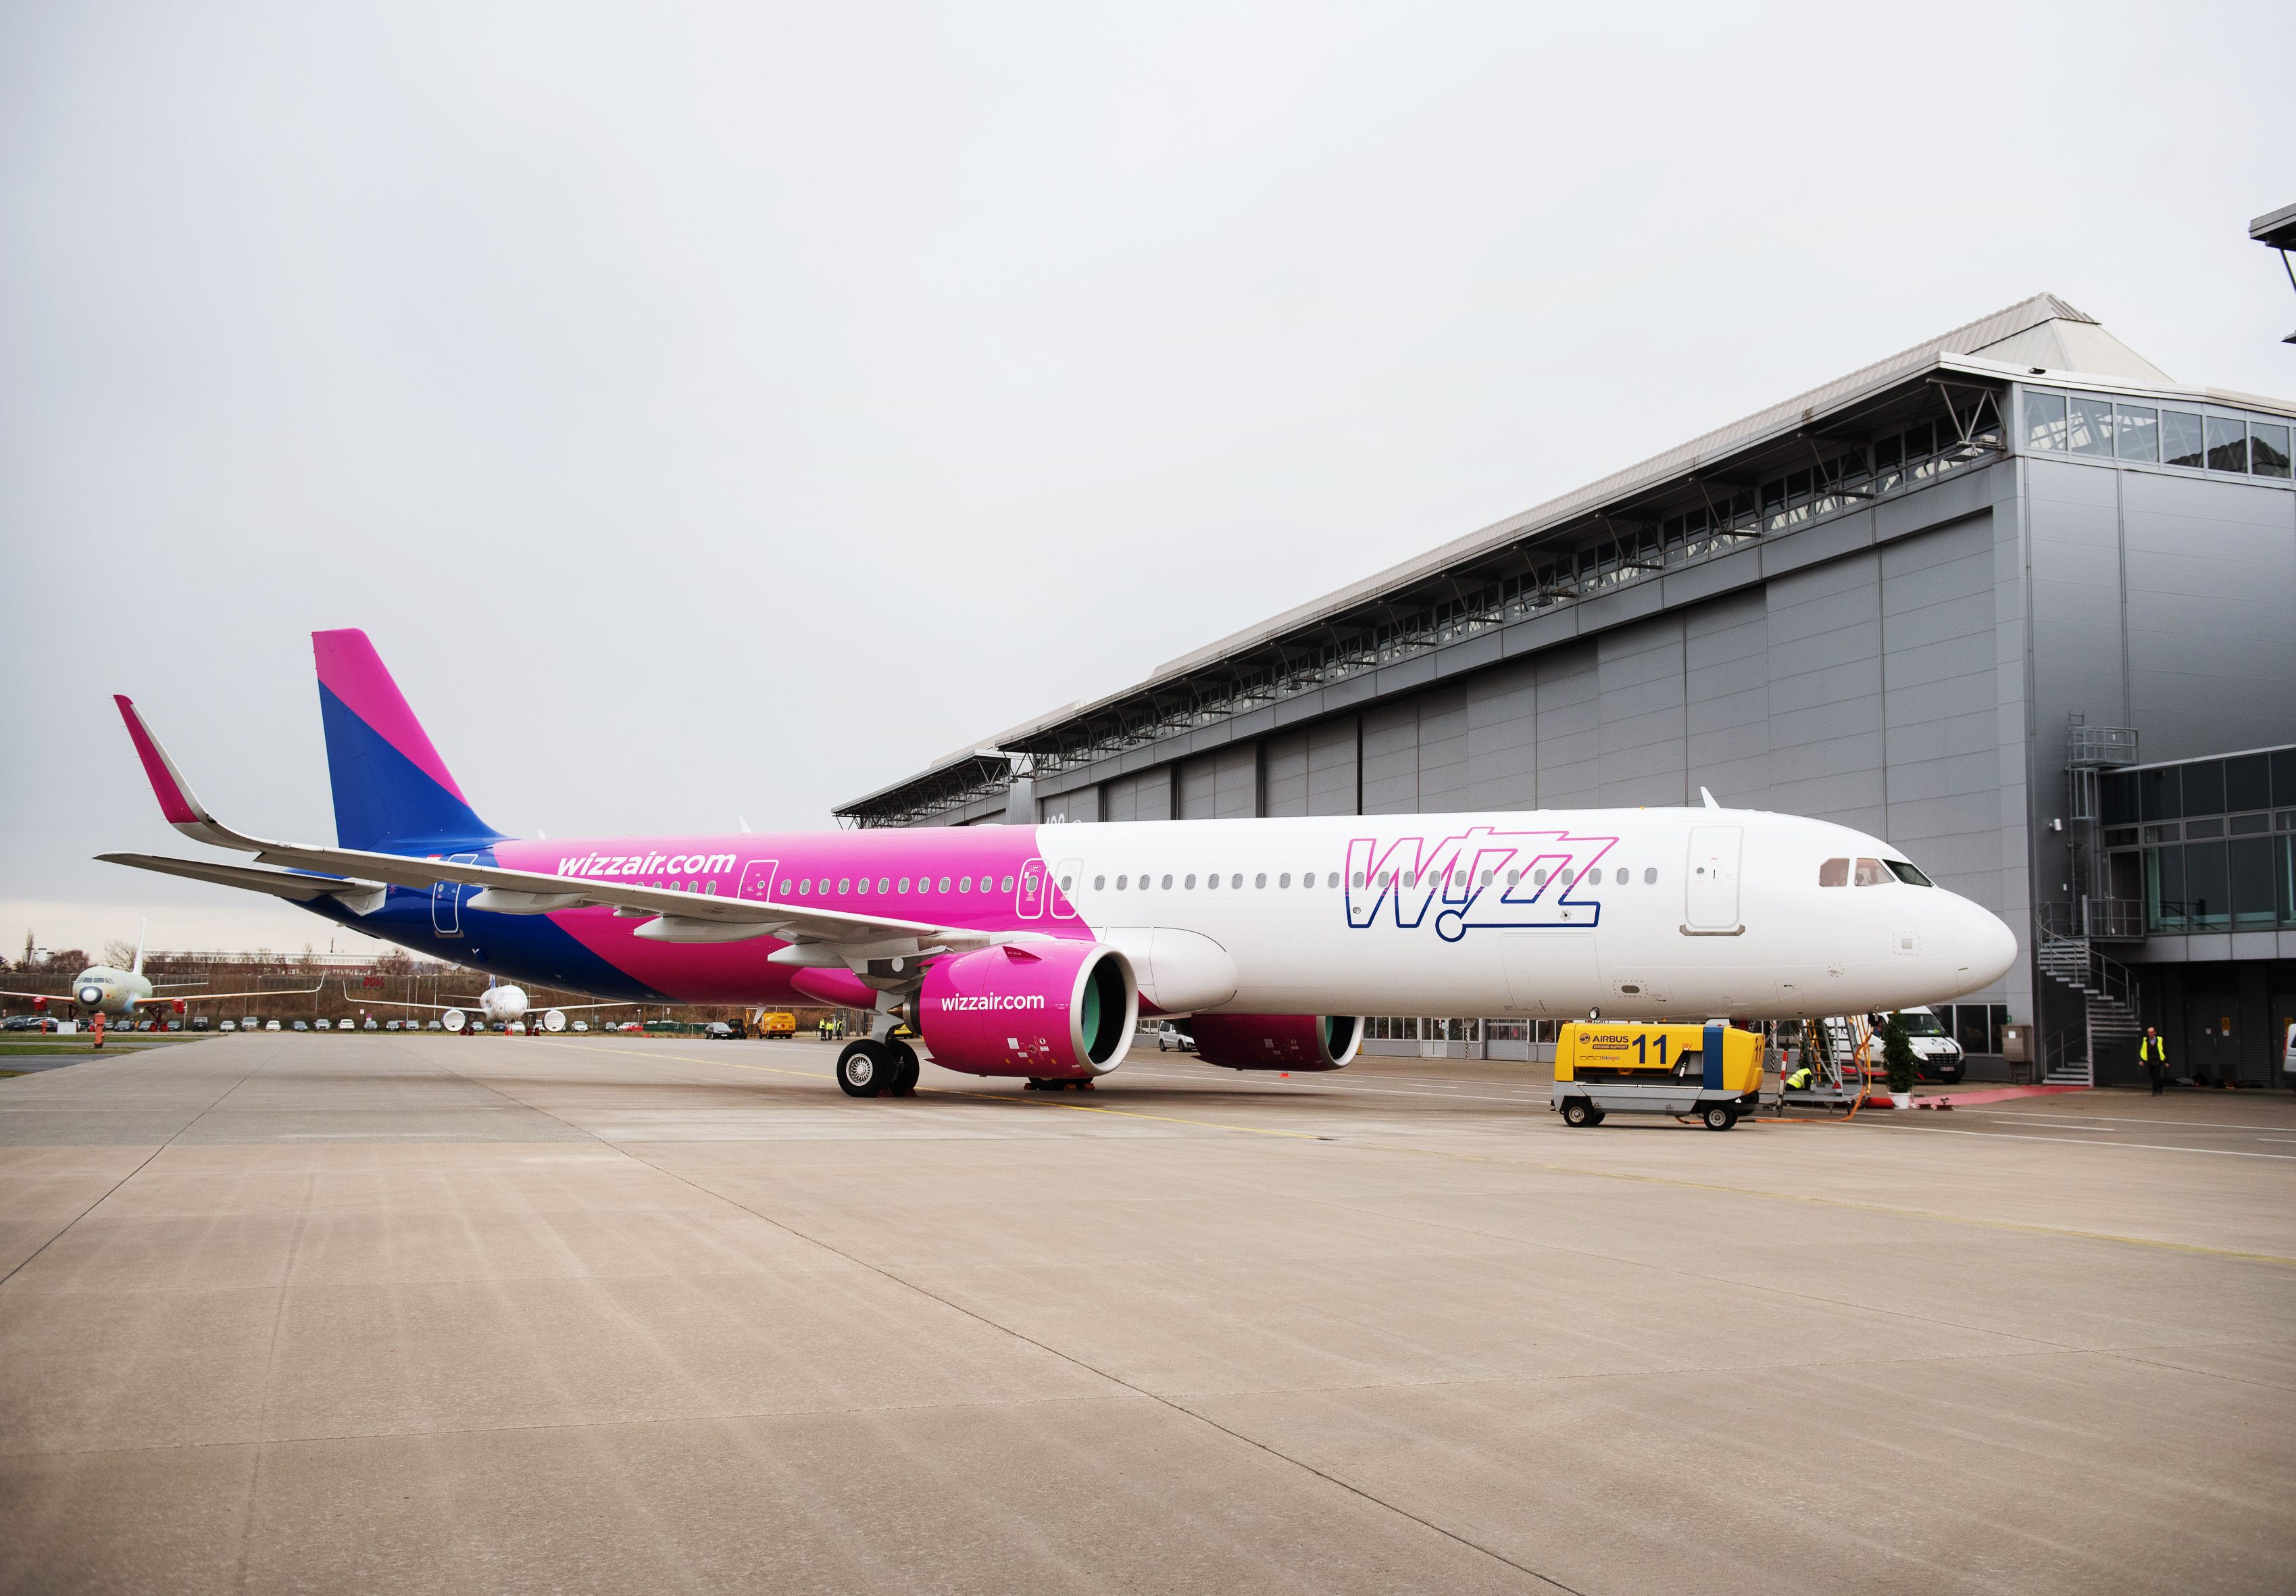 Wizz Air s initial A321neo